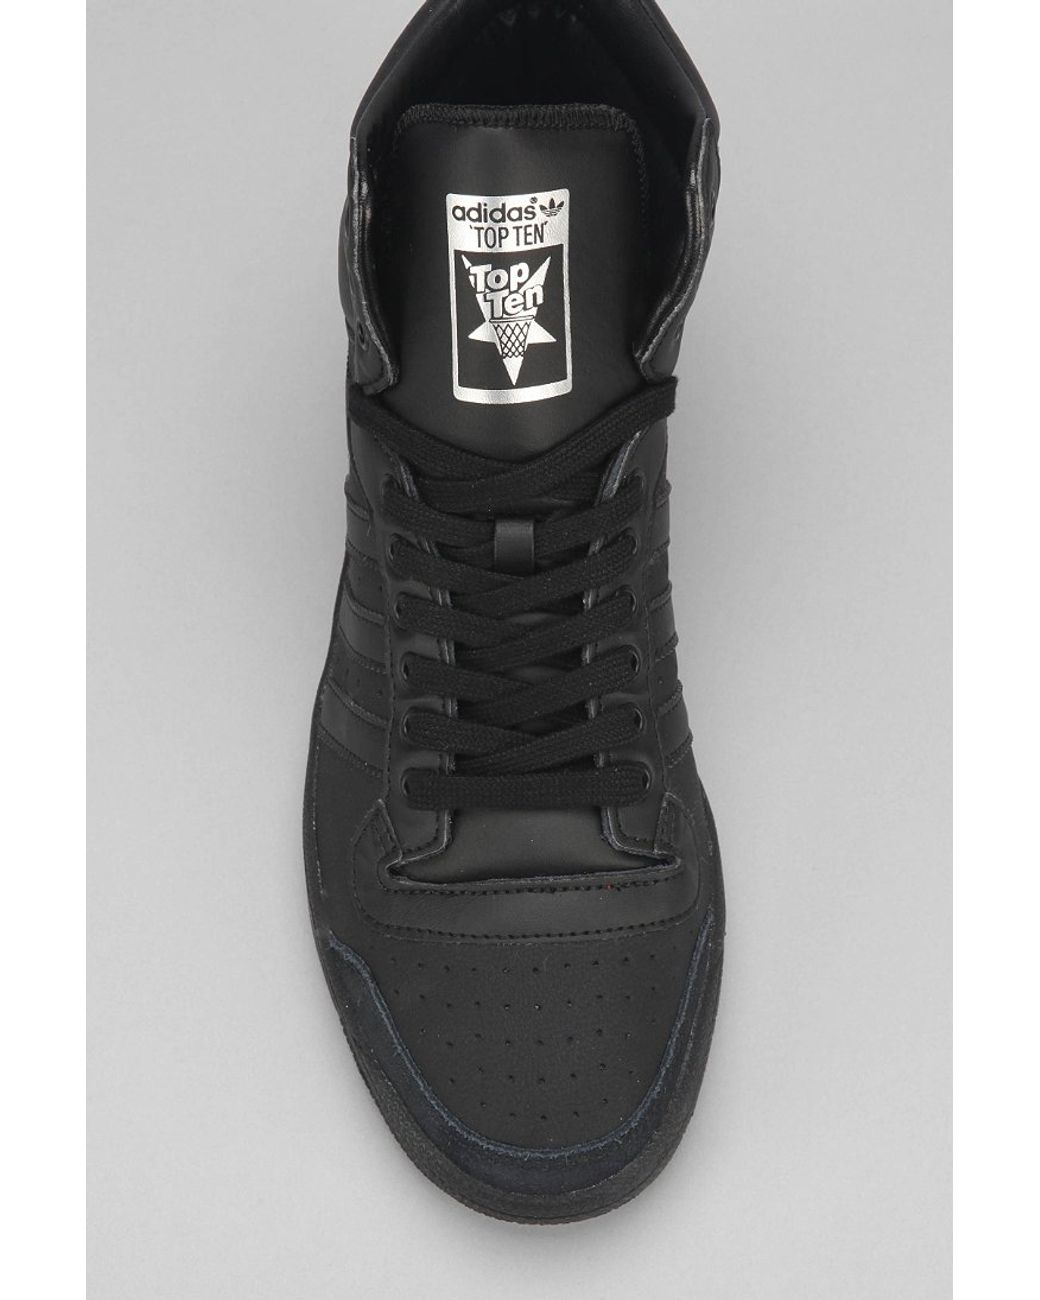 adidas Originals Top 10 High-Top Sneaker Black for Men | Lyst